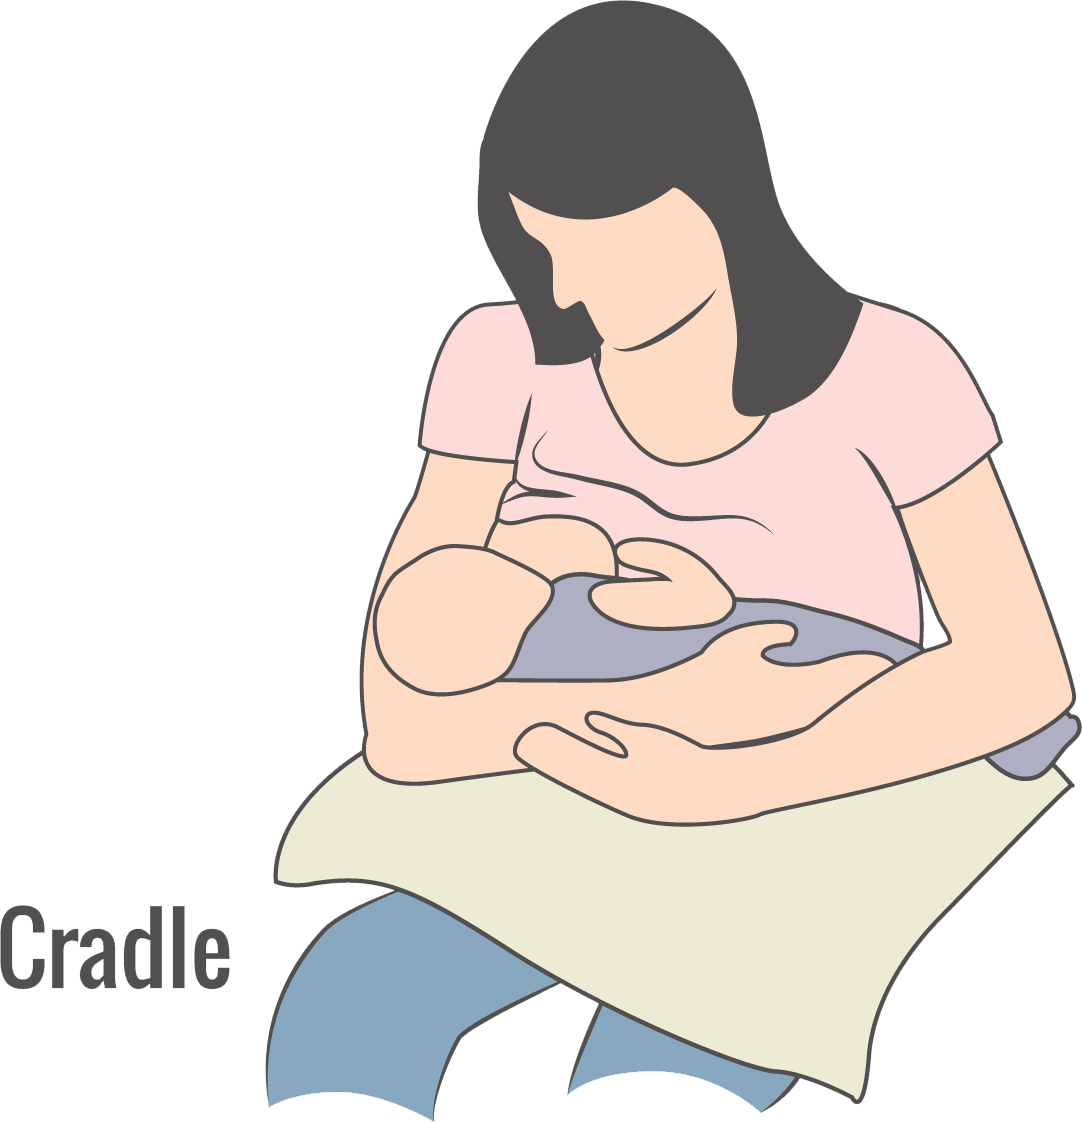 illustration of cradle breastfeeding hold